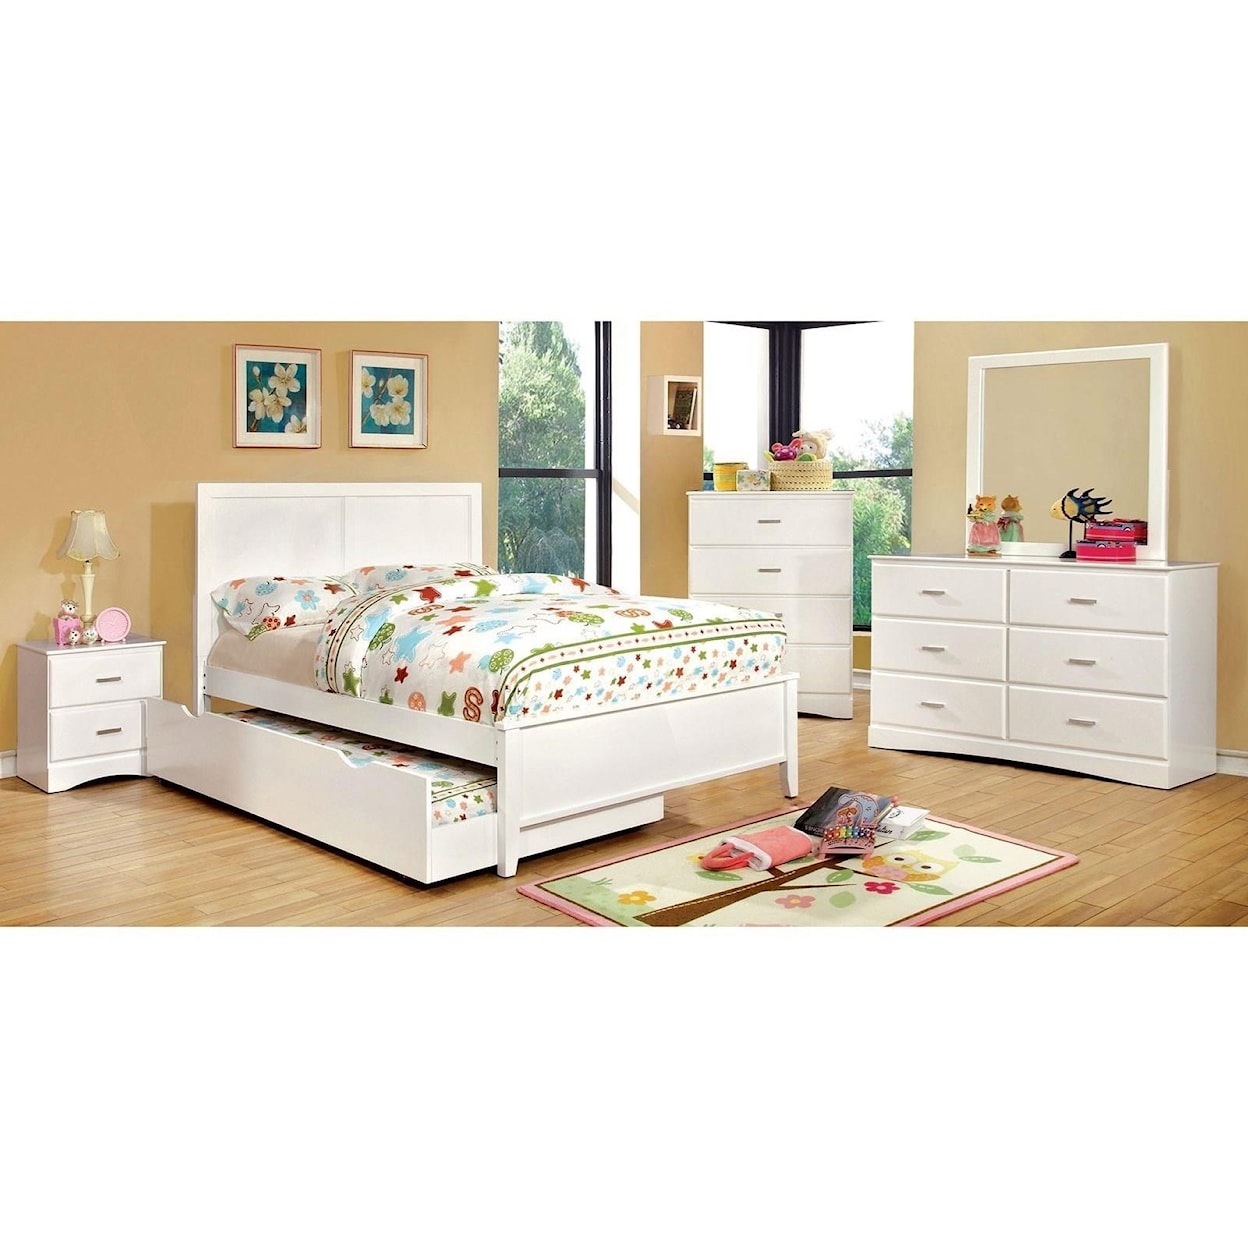 Furniture of America Prismo Twin Bed